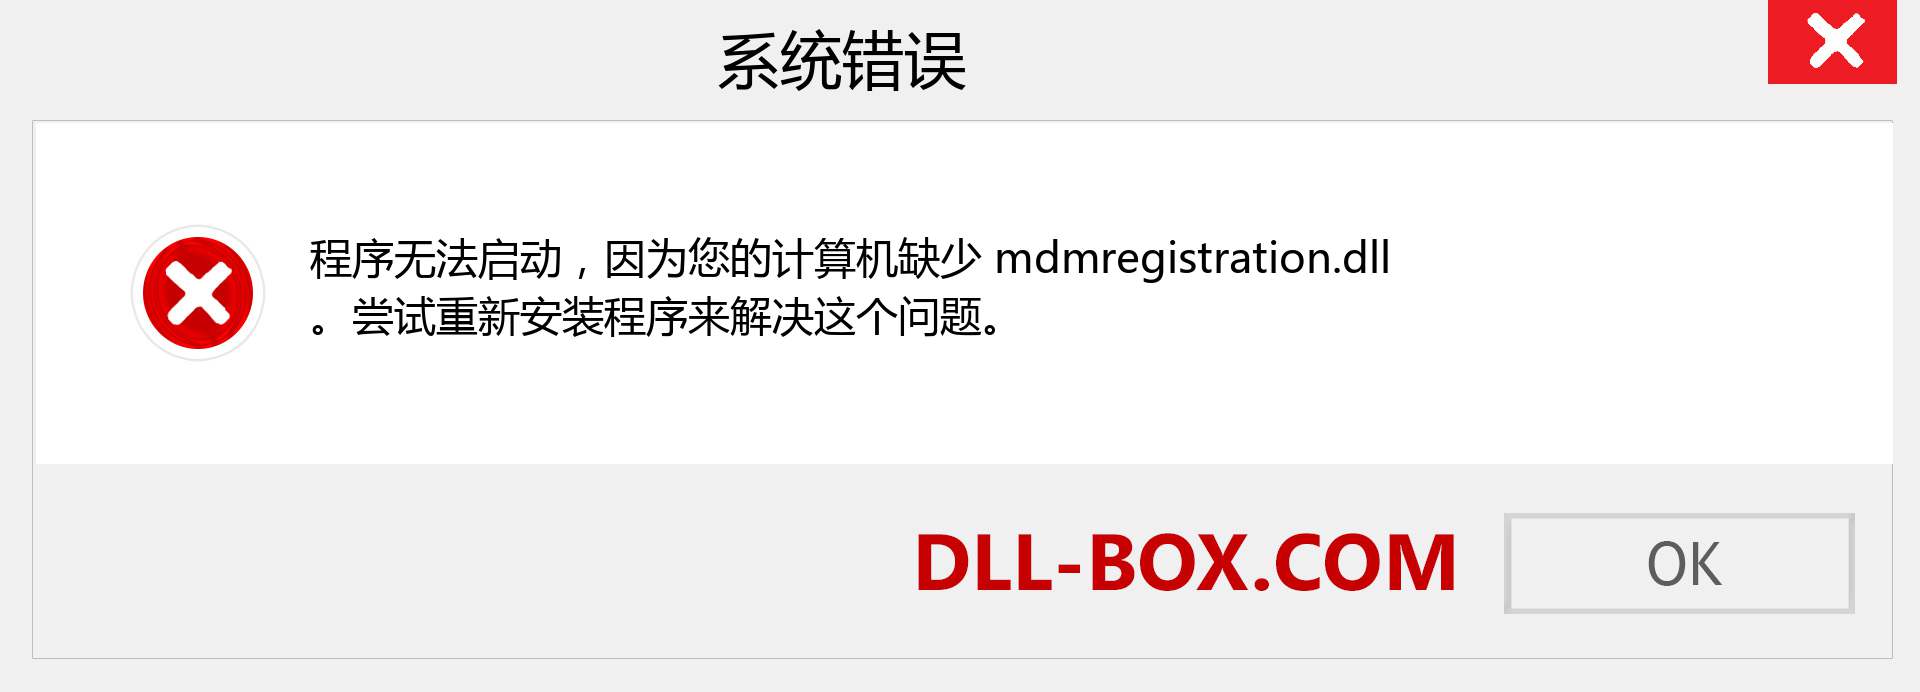 mdmregistration.dll 文件丢失？。 适用于 Windows 7、8、10 的下载 - 修复 Windows、照片、图像上的 mdmregistration dll 丢失错误